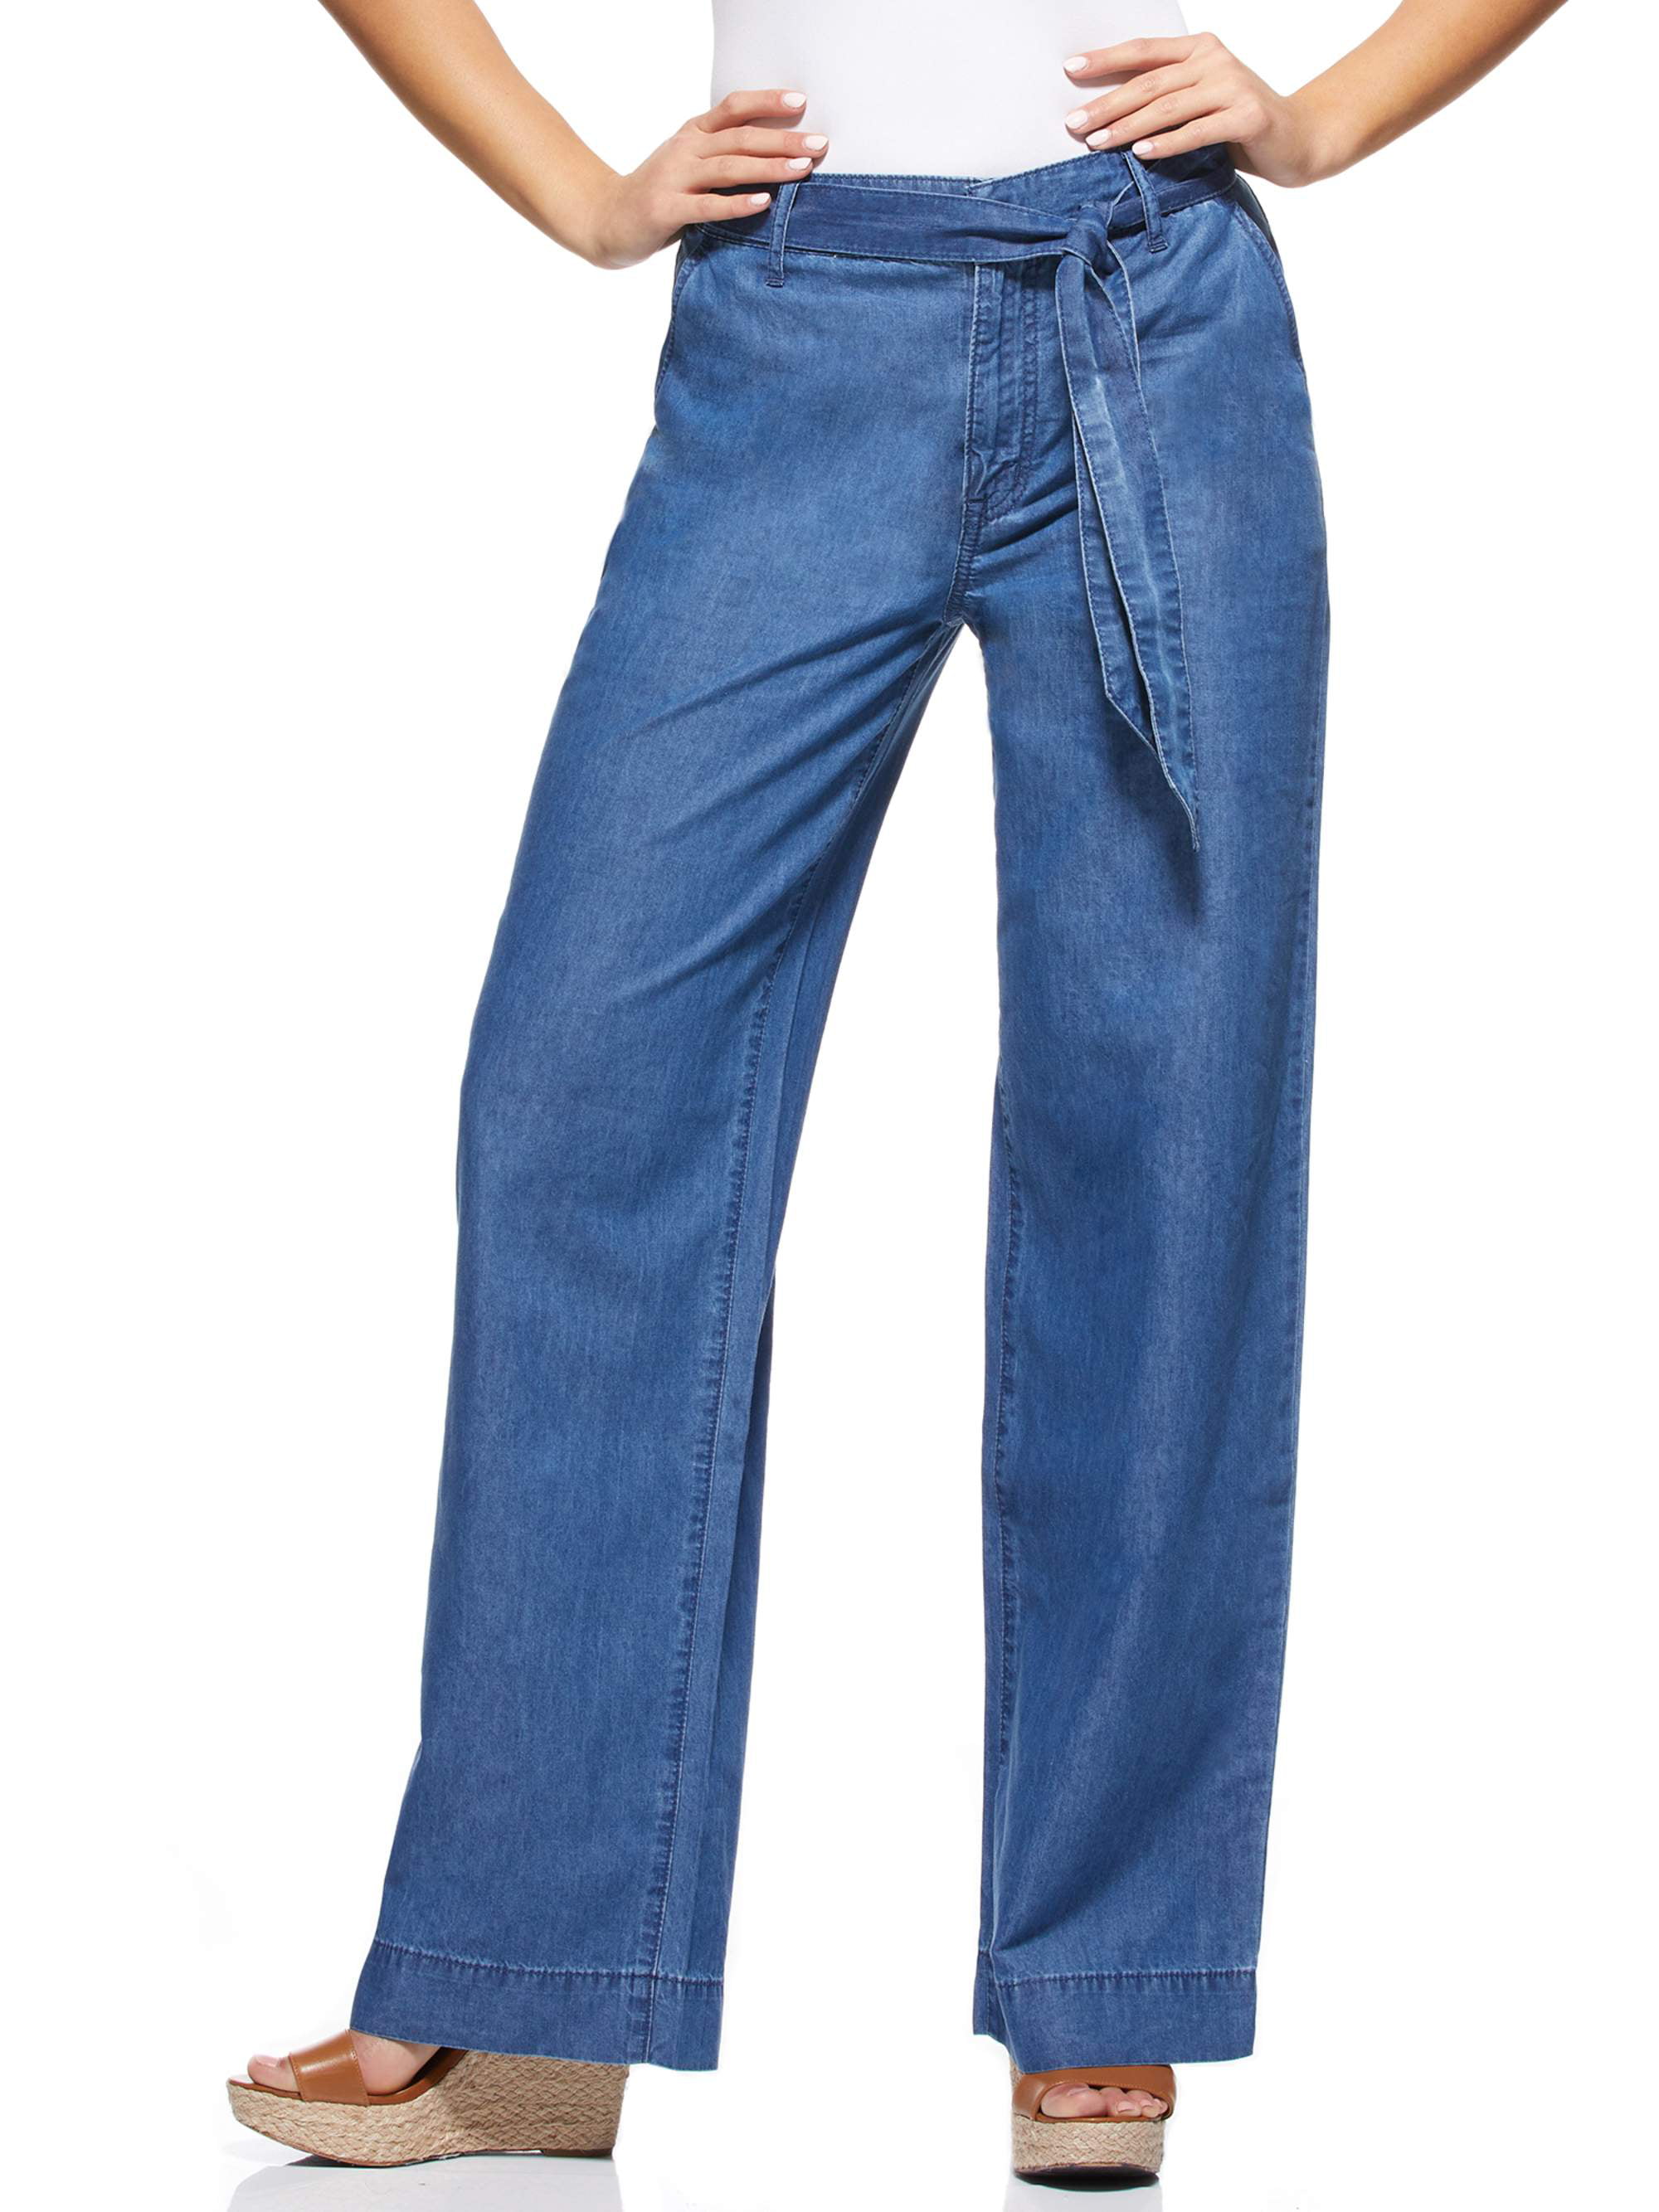 sofia vergara walmart jeans